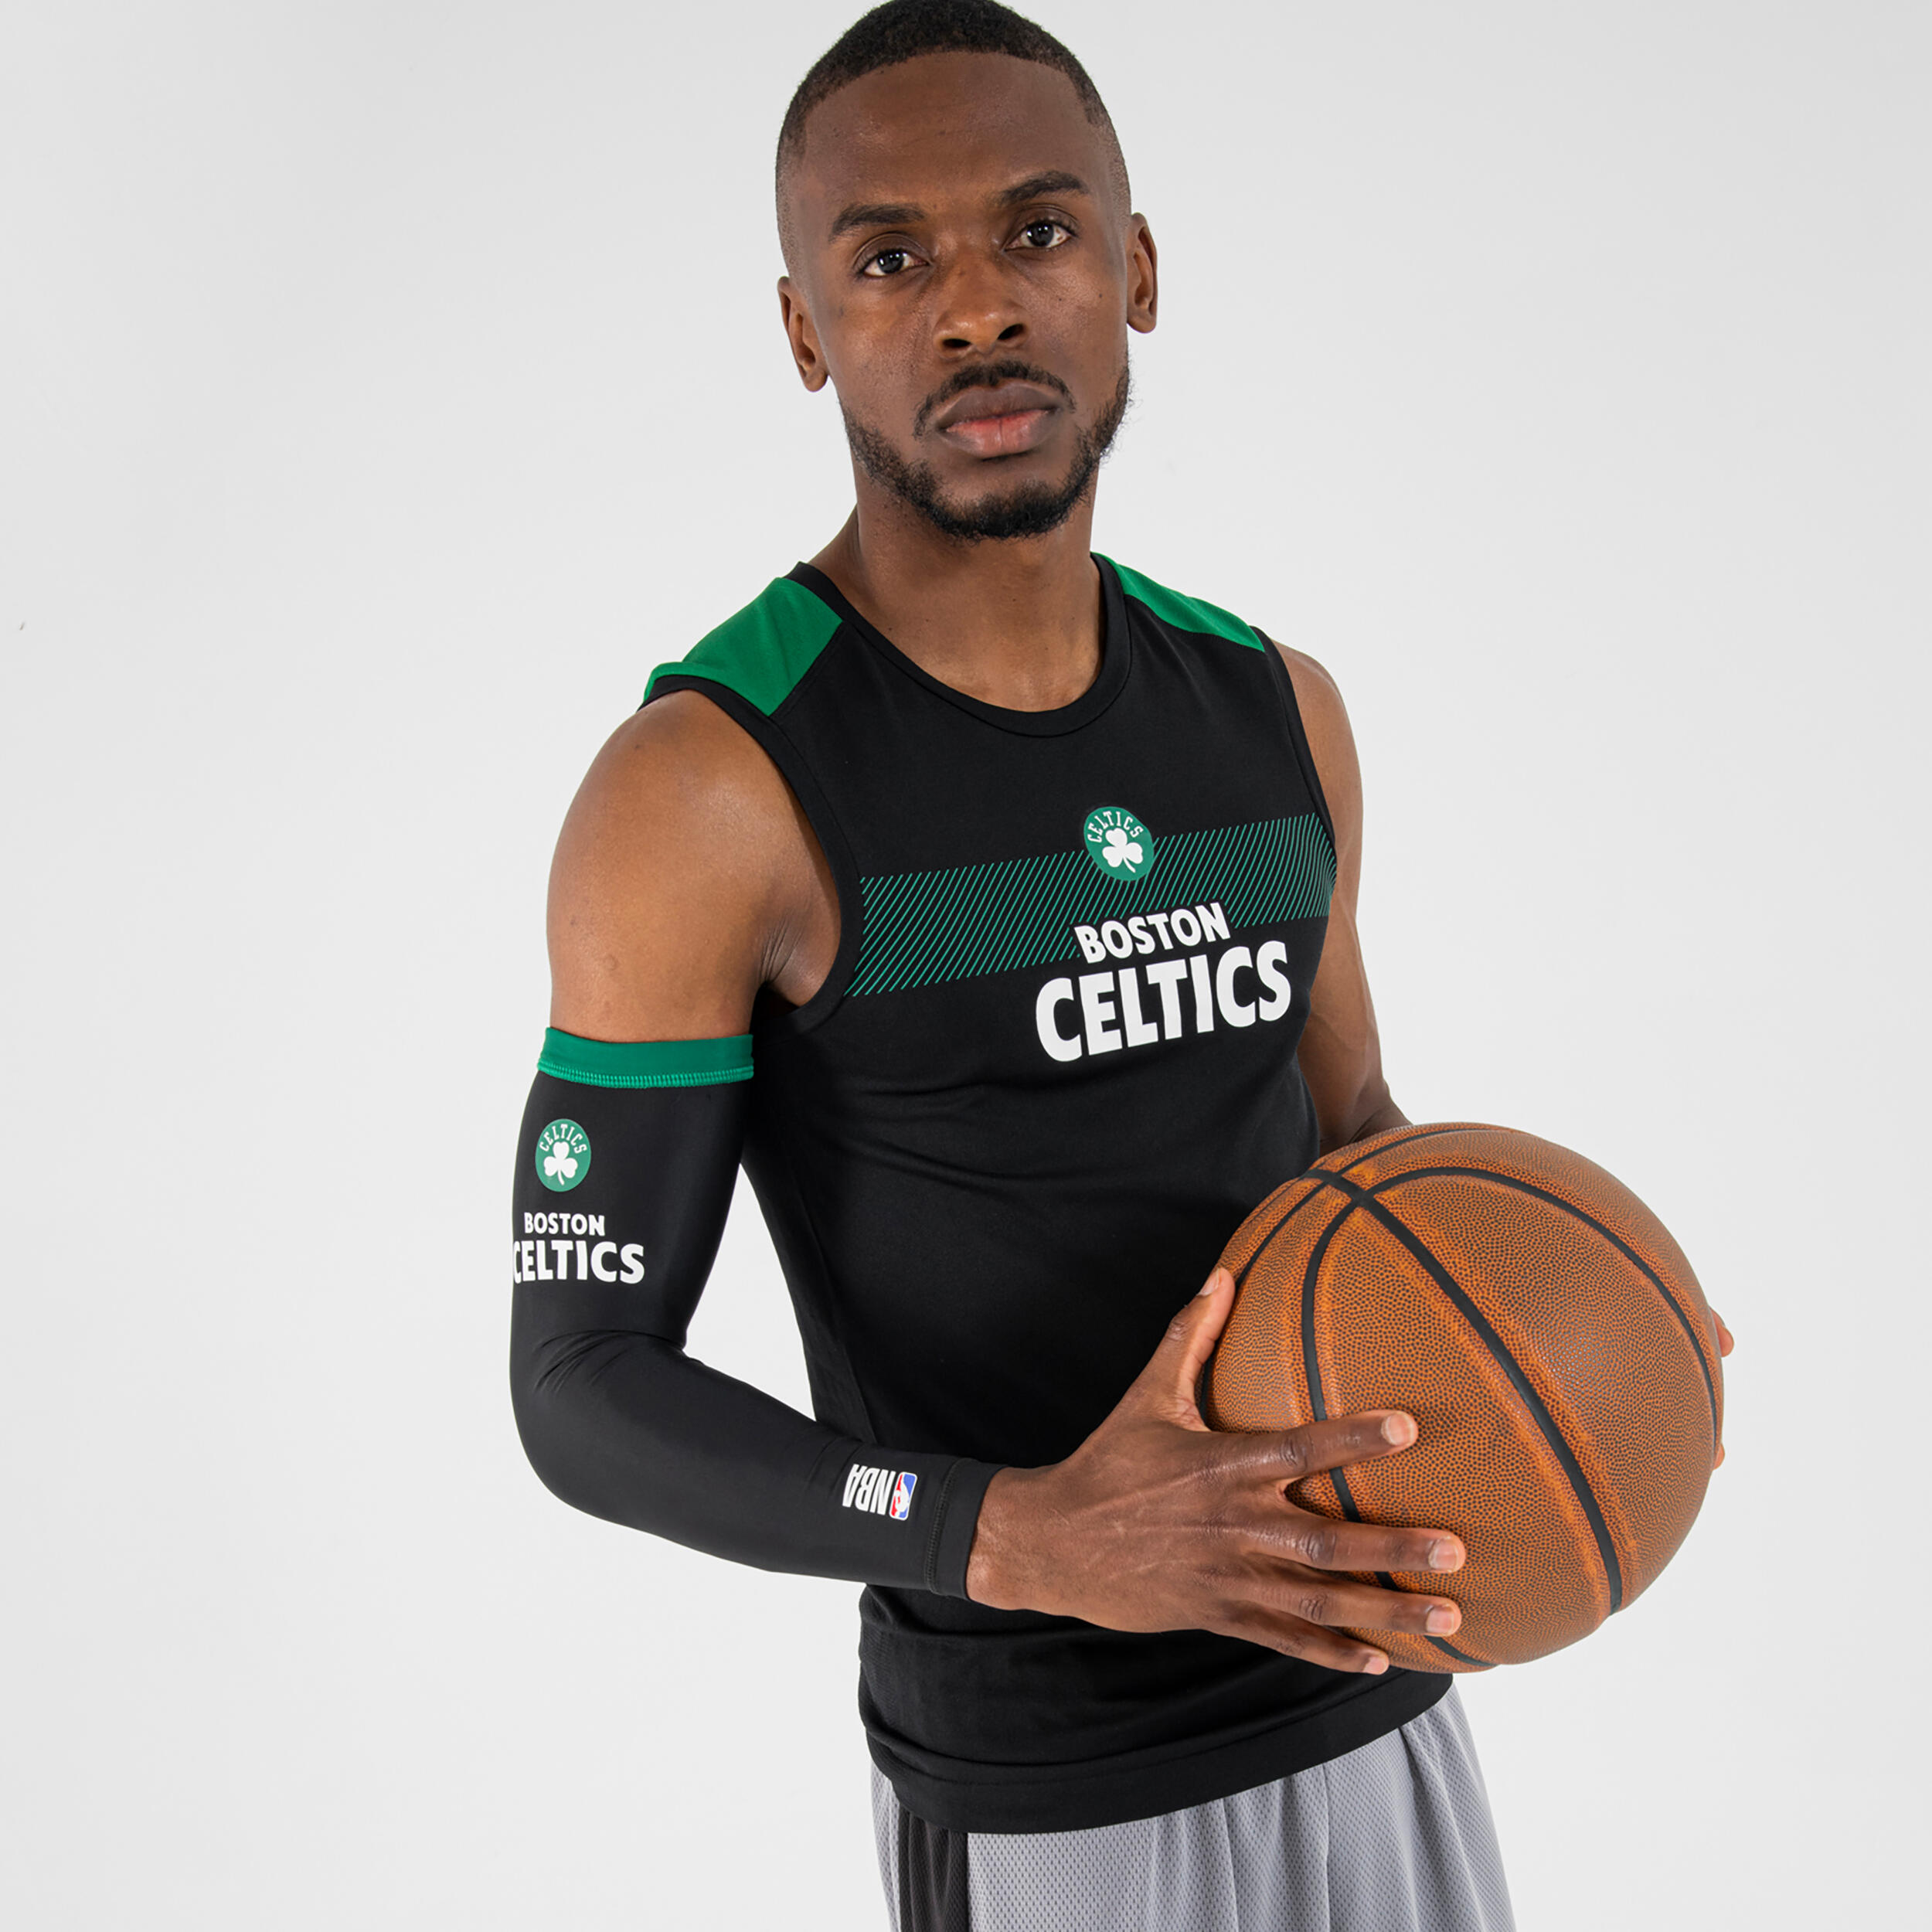 Adult Sleeveless Basketball Base Layer Jersey UT500 - NBA Boston Celtics/Black 6/10